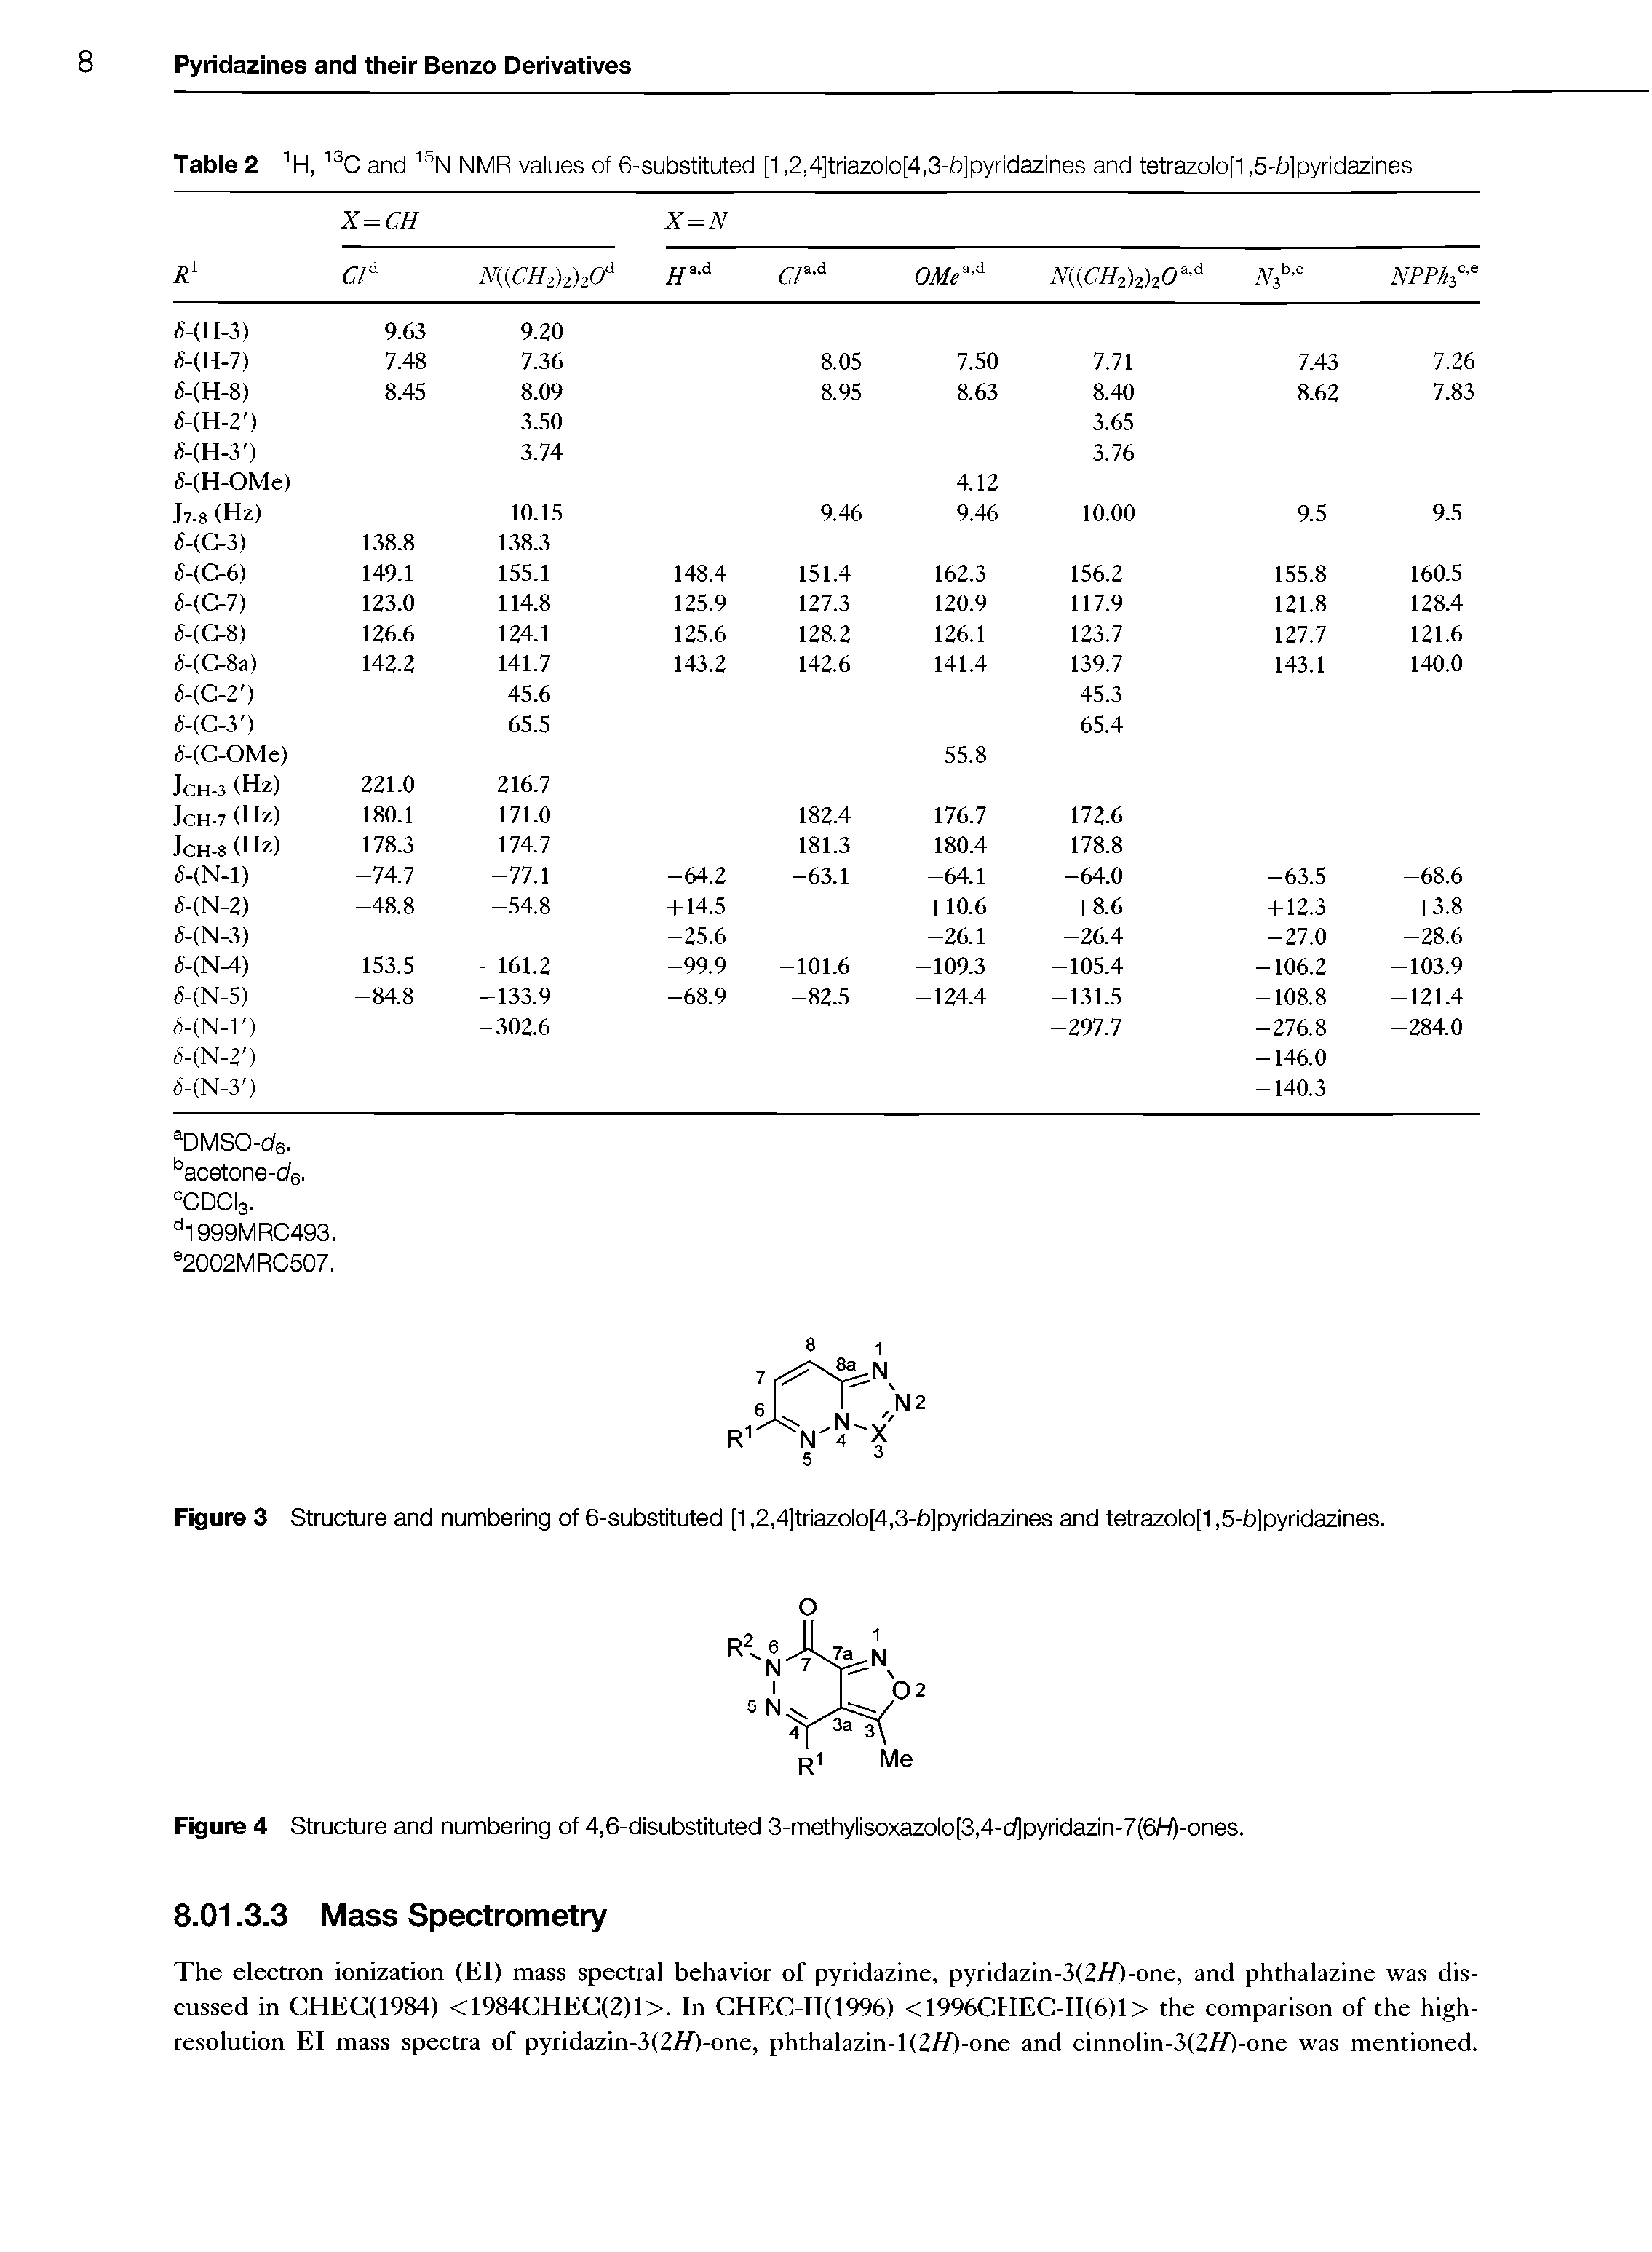 Figure 4 Structure and numbering of 4,6-disubstituted 3-methyiisoxazoio[3,4-c/ pyridazin-7(6H)-ones.